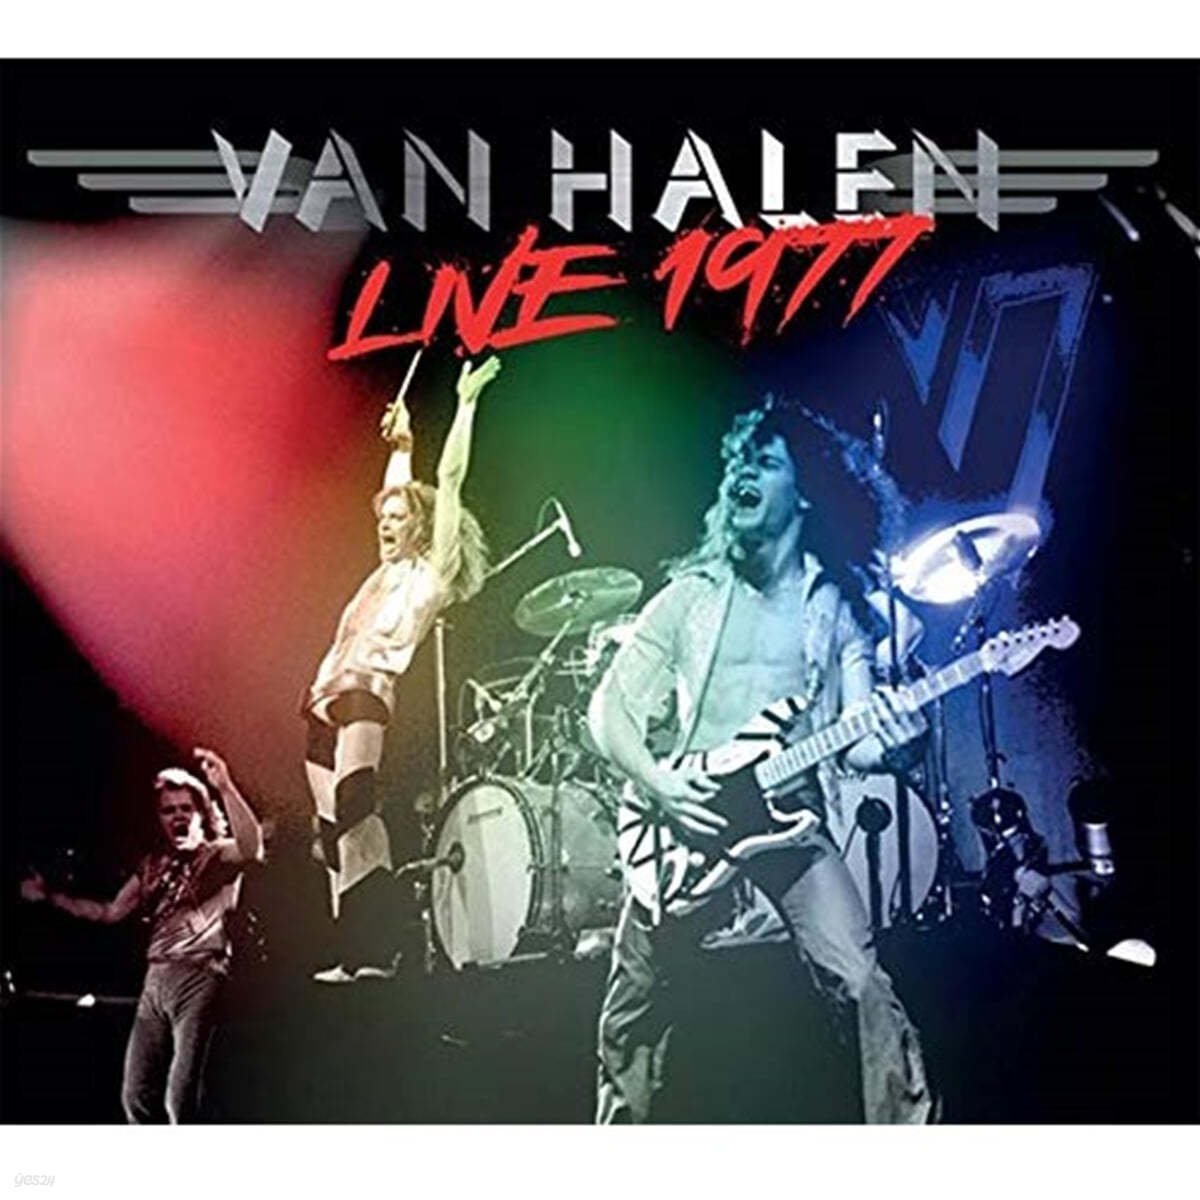 Van Halen (밴 헤일런) - Live 1977 [레드 컬러 LP] 